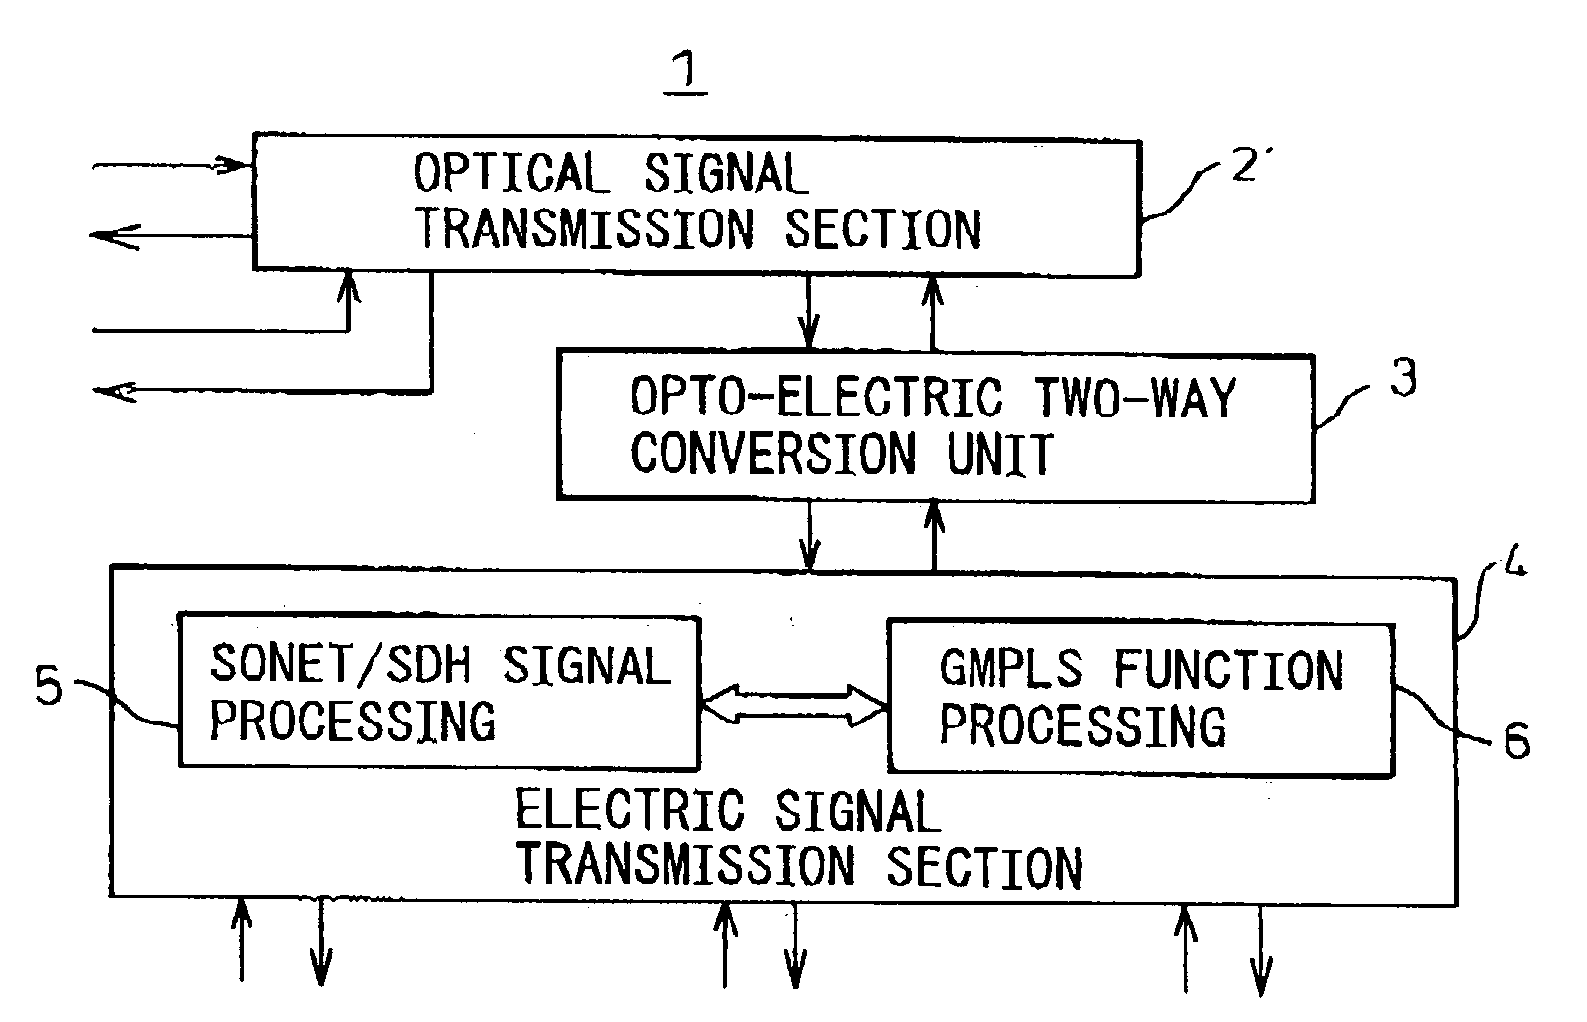 Transmission apparatus